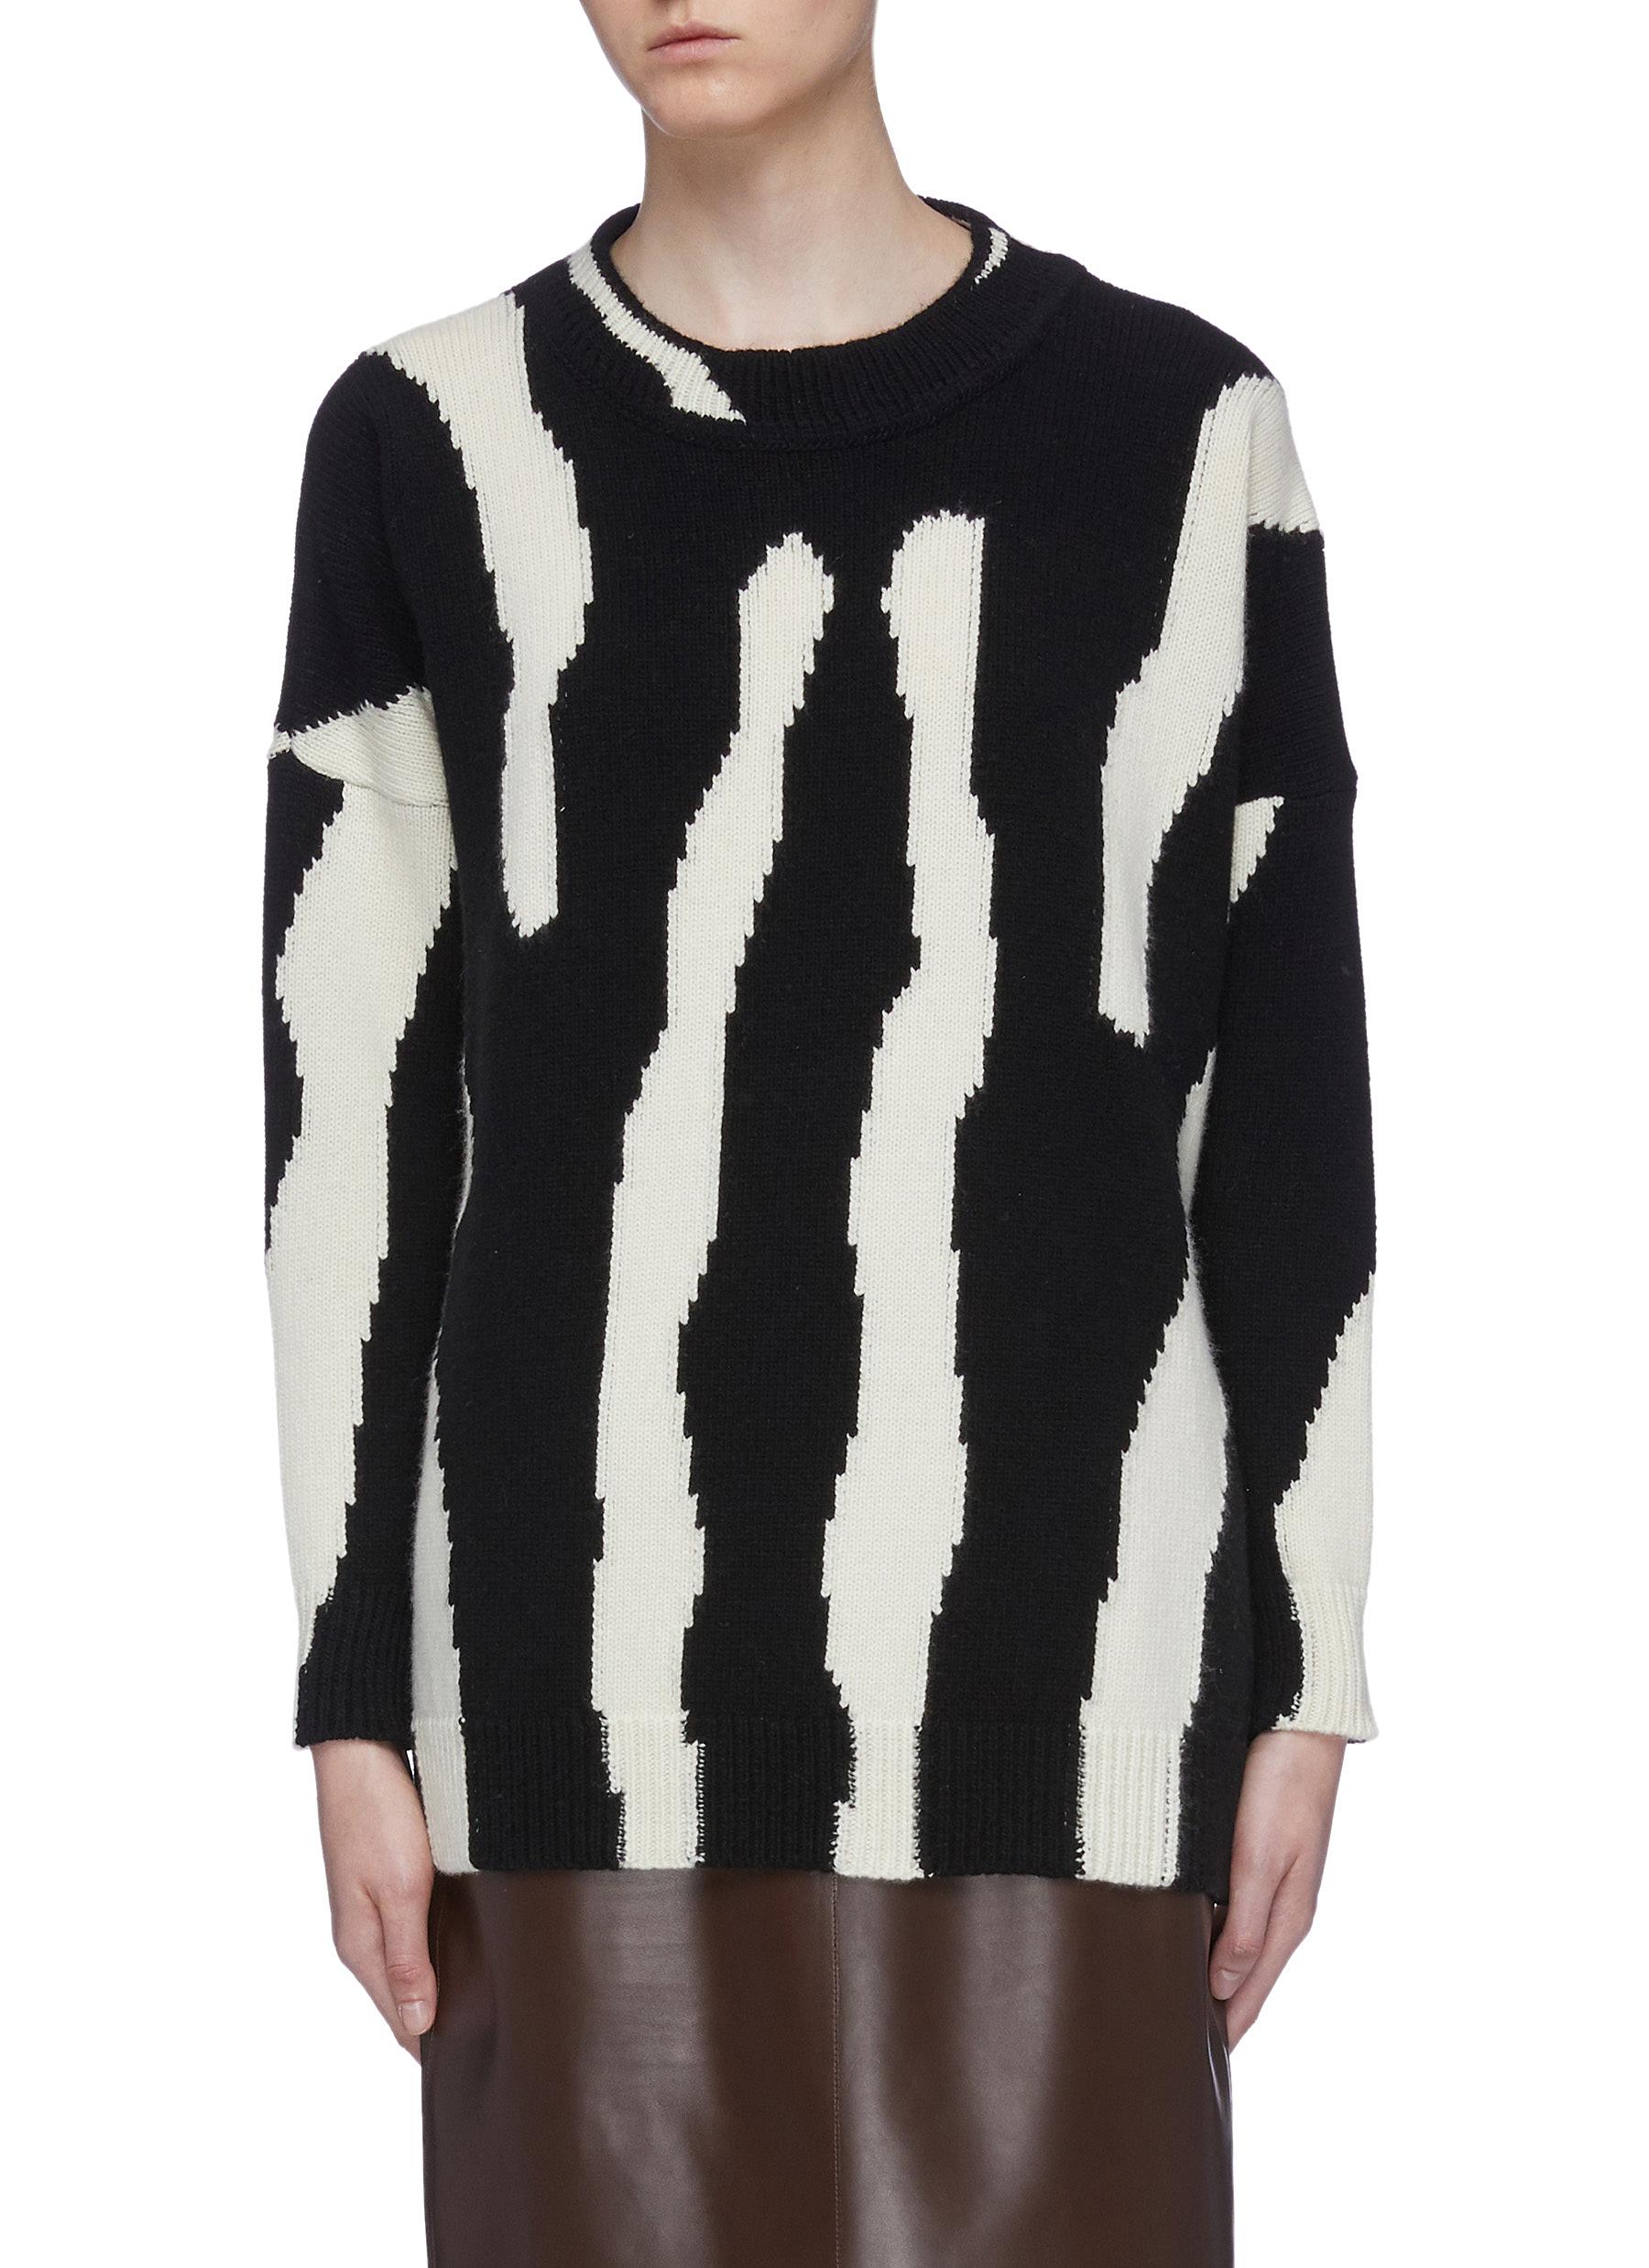 Abstract jacquard virgin wool-cashmere sweater by Oscar De La Renta